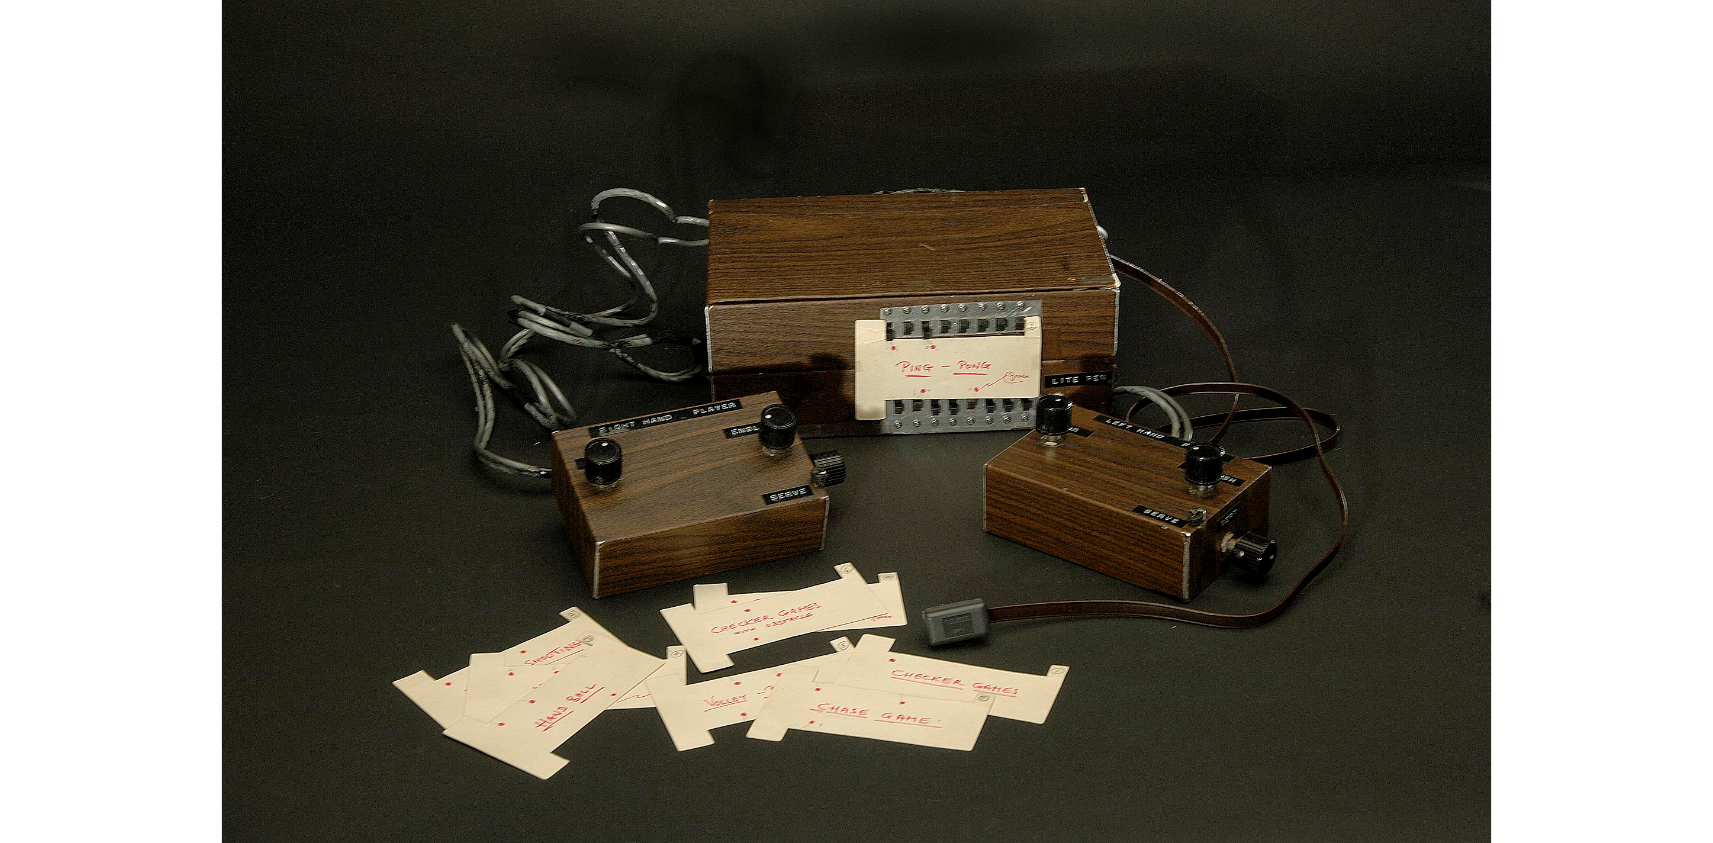 Ralph Baers "Borwn Box", die Mutter aller Spielkonsolen (Foto: Smithsonian, public domain)